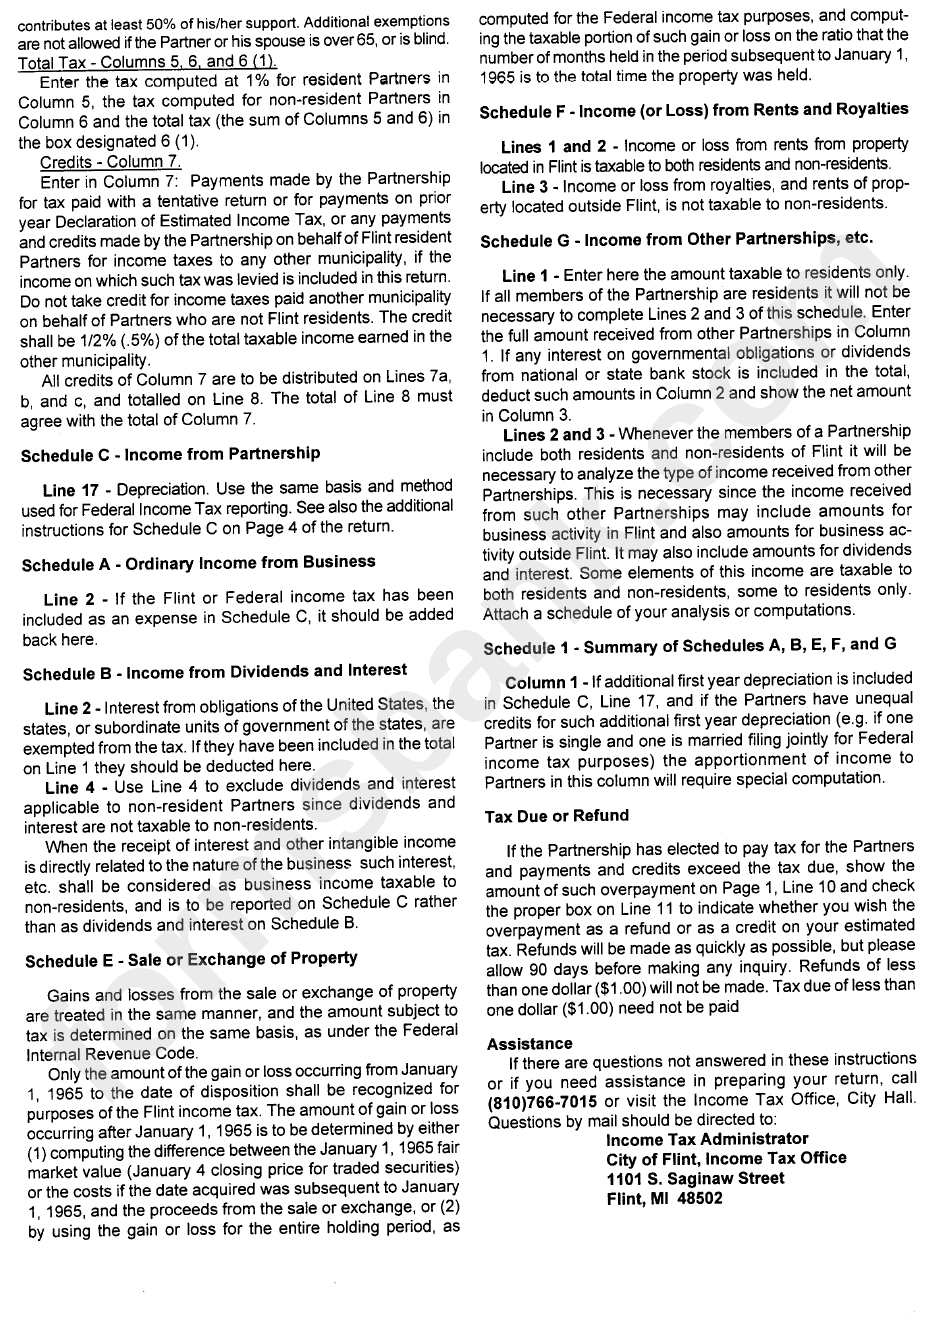 Instructions For Form F1065 - Partnership Return - City Of Flint - 2001